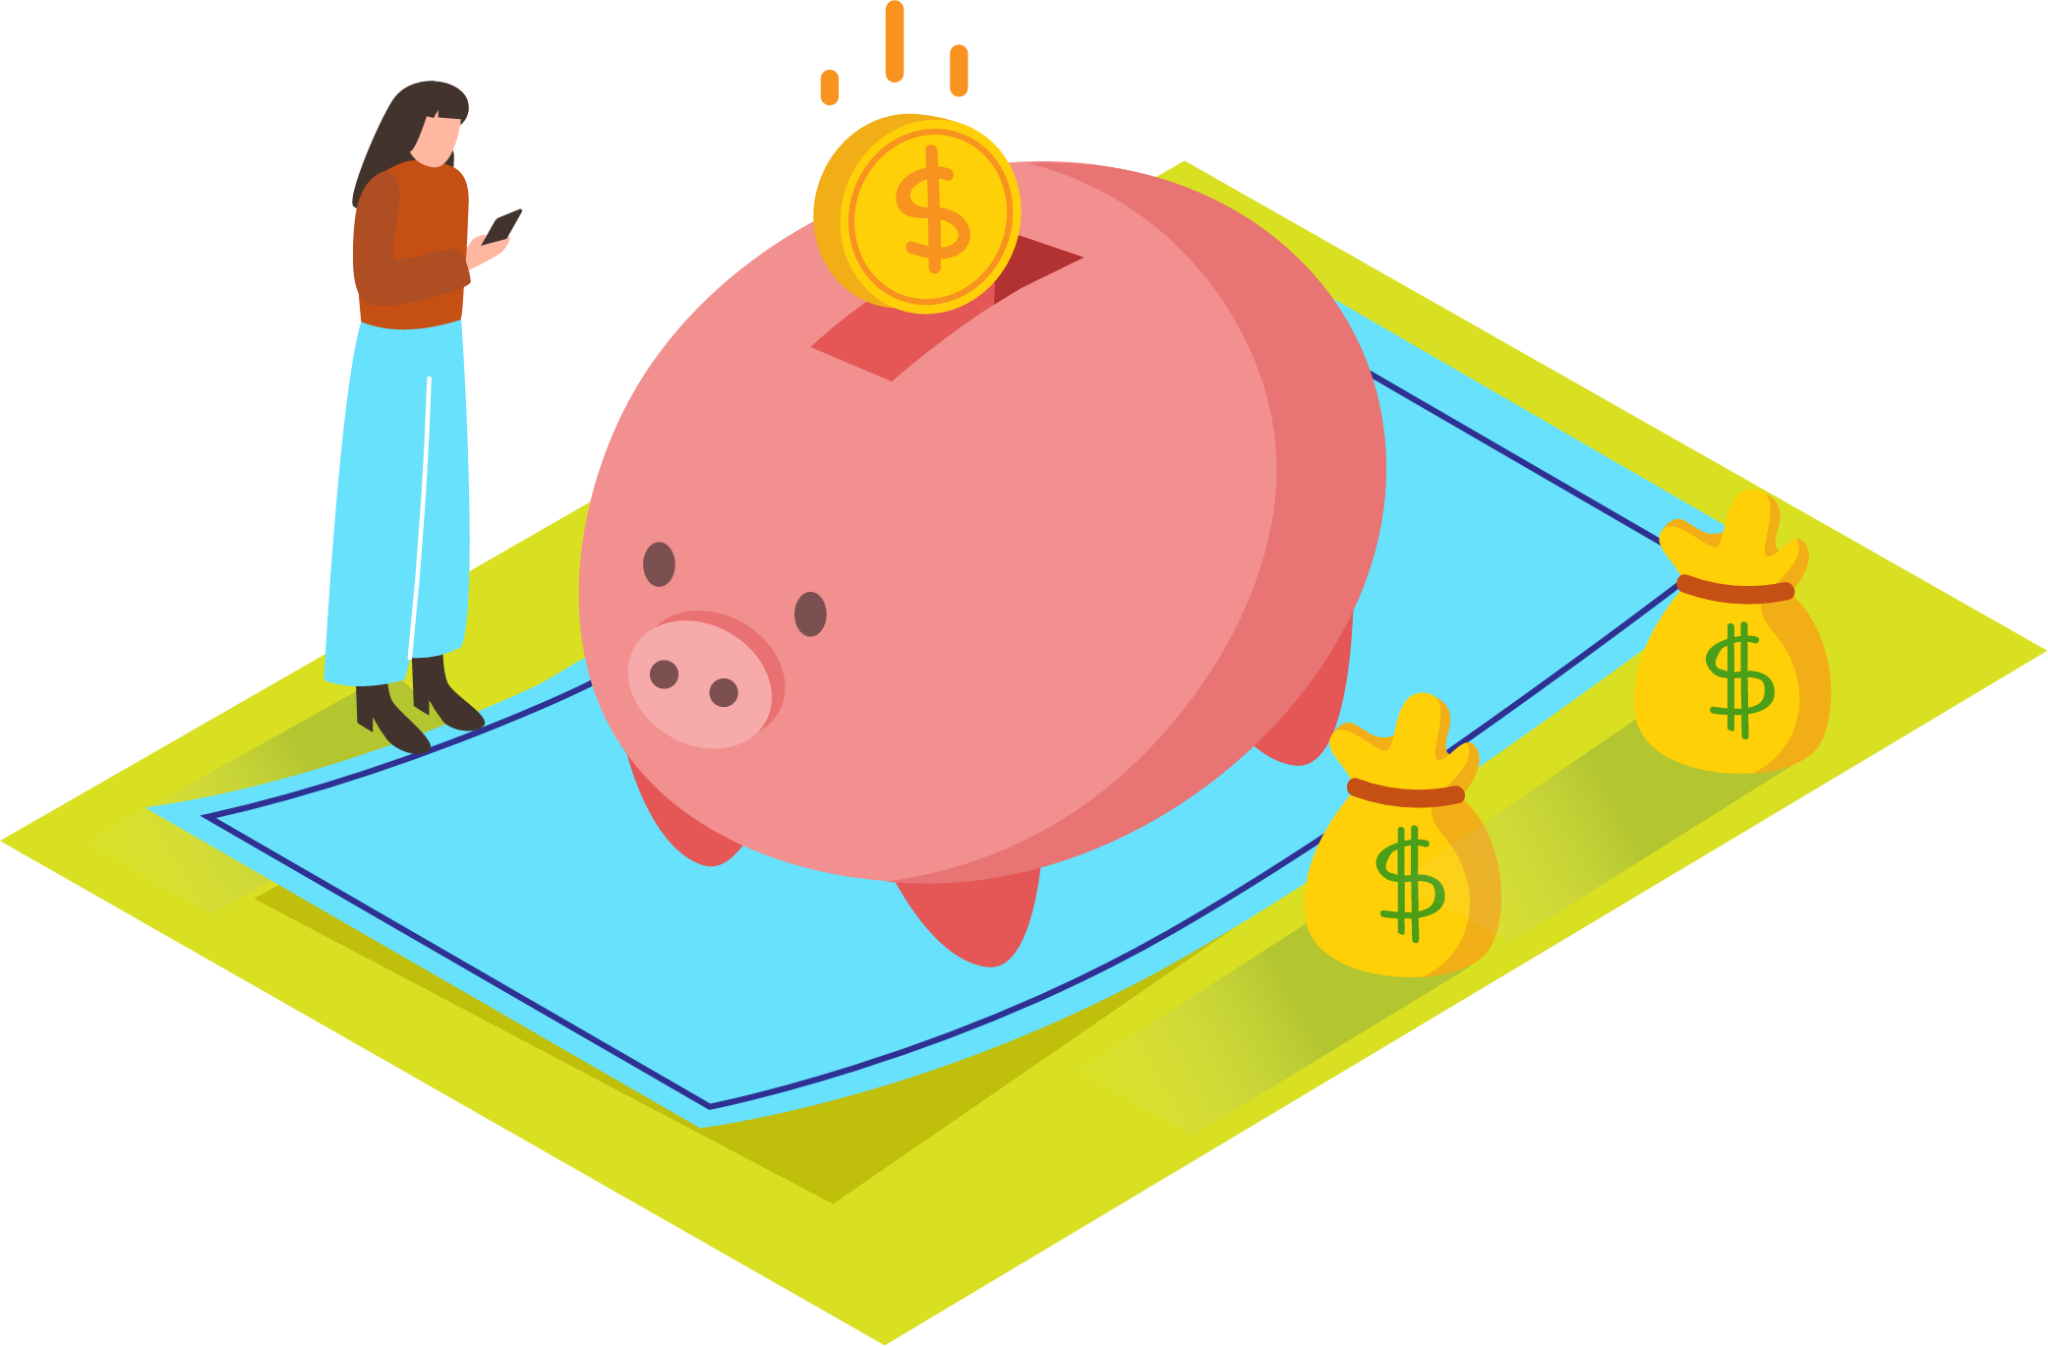 Piggy Bank illustration